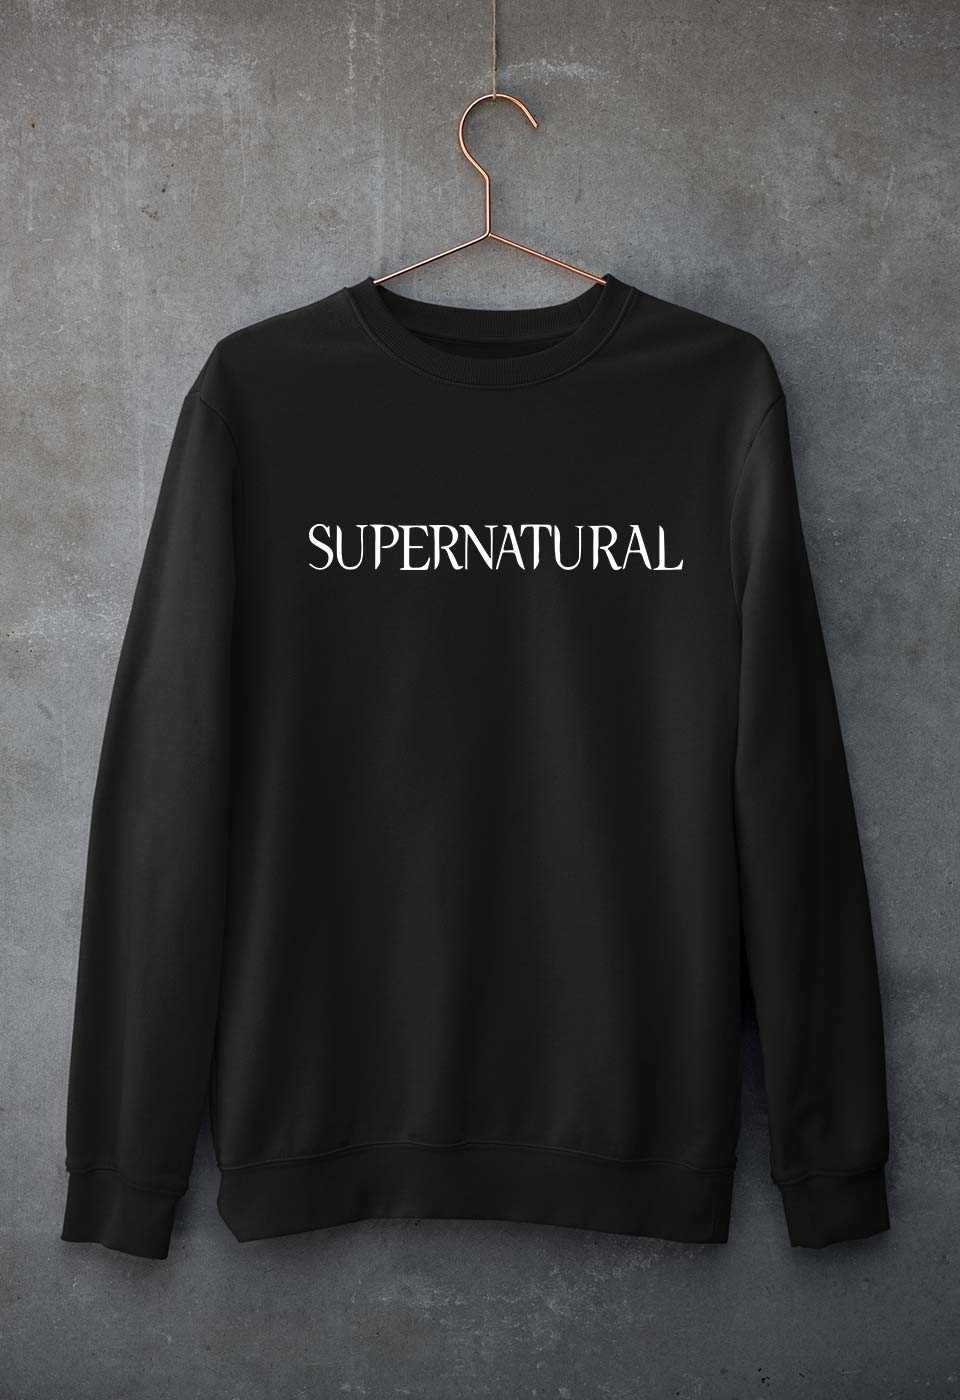 Supernatural Unisex Sweatshirt for Men/Women-S(40 Inches)-Black-Ektarfa.online